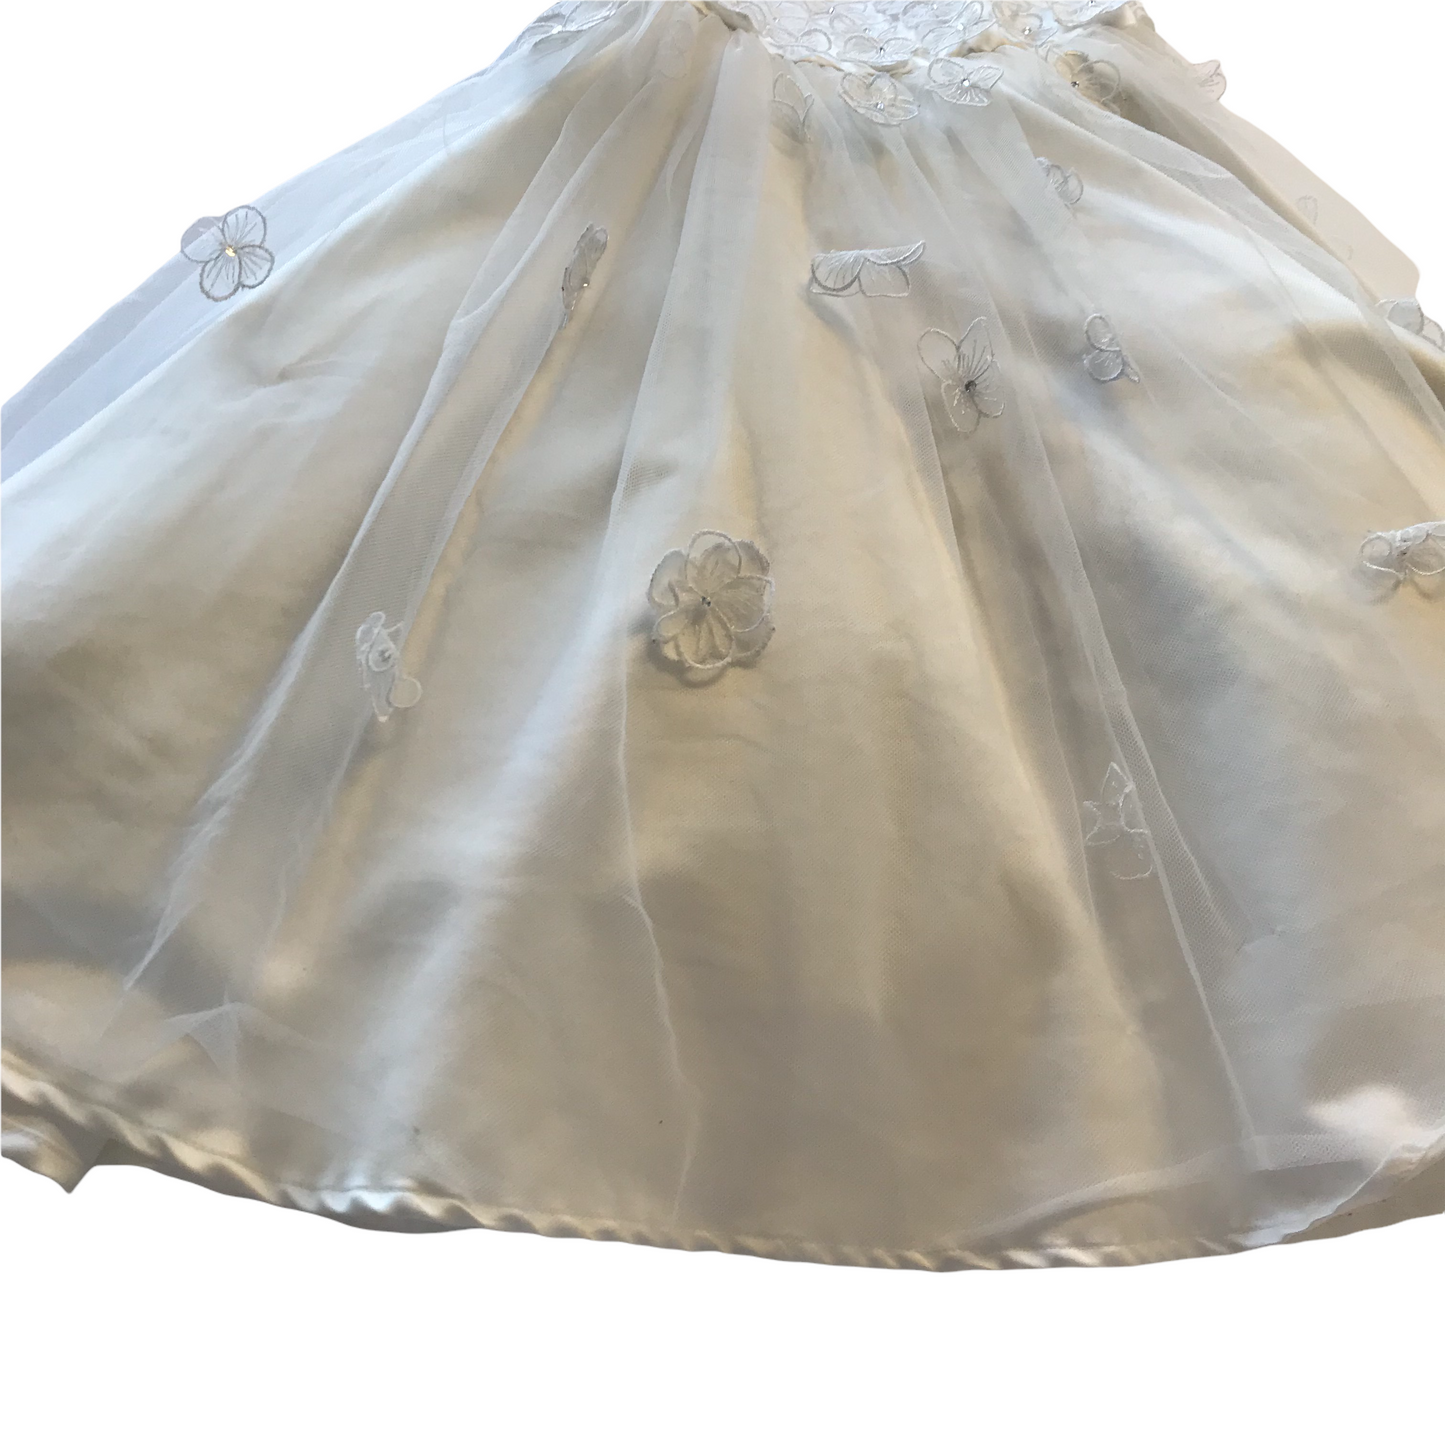 RJR. John Rocha White Floral Formal Dress Age 4